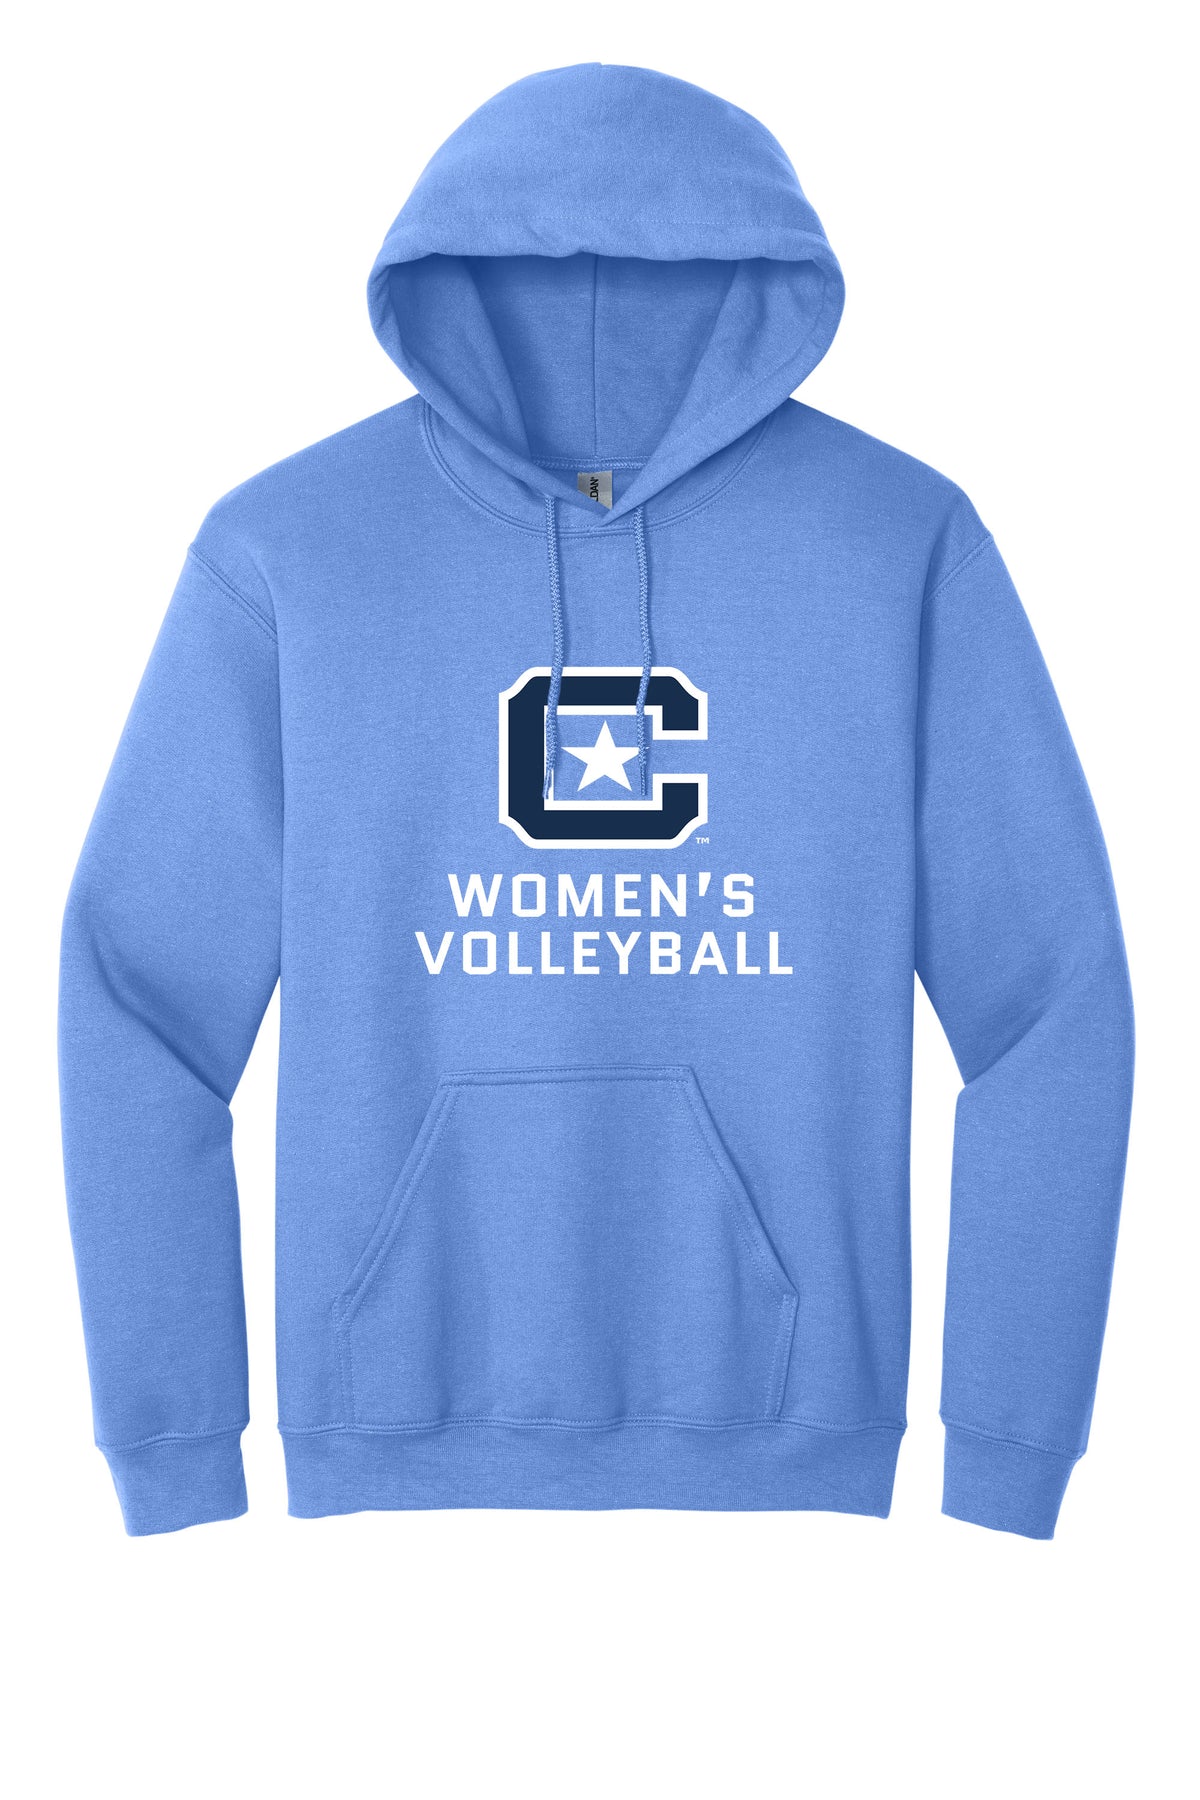 The Citadel Block C Star logo, Sports - Volleyball,  Heavy Blend™ Hooded Unisex Sweatshirt